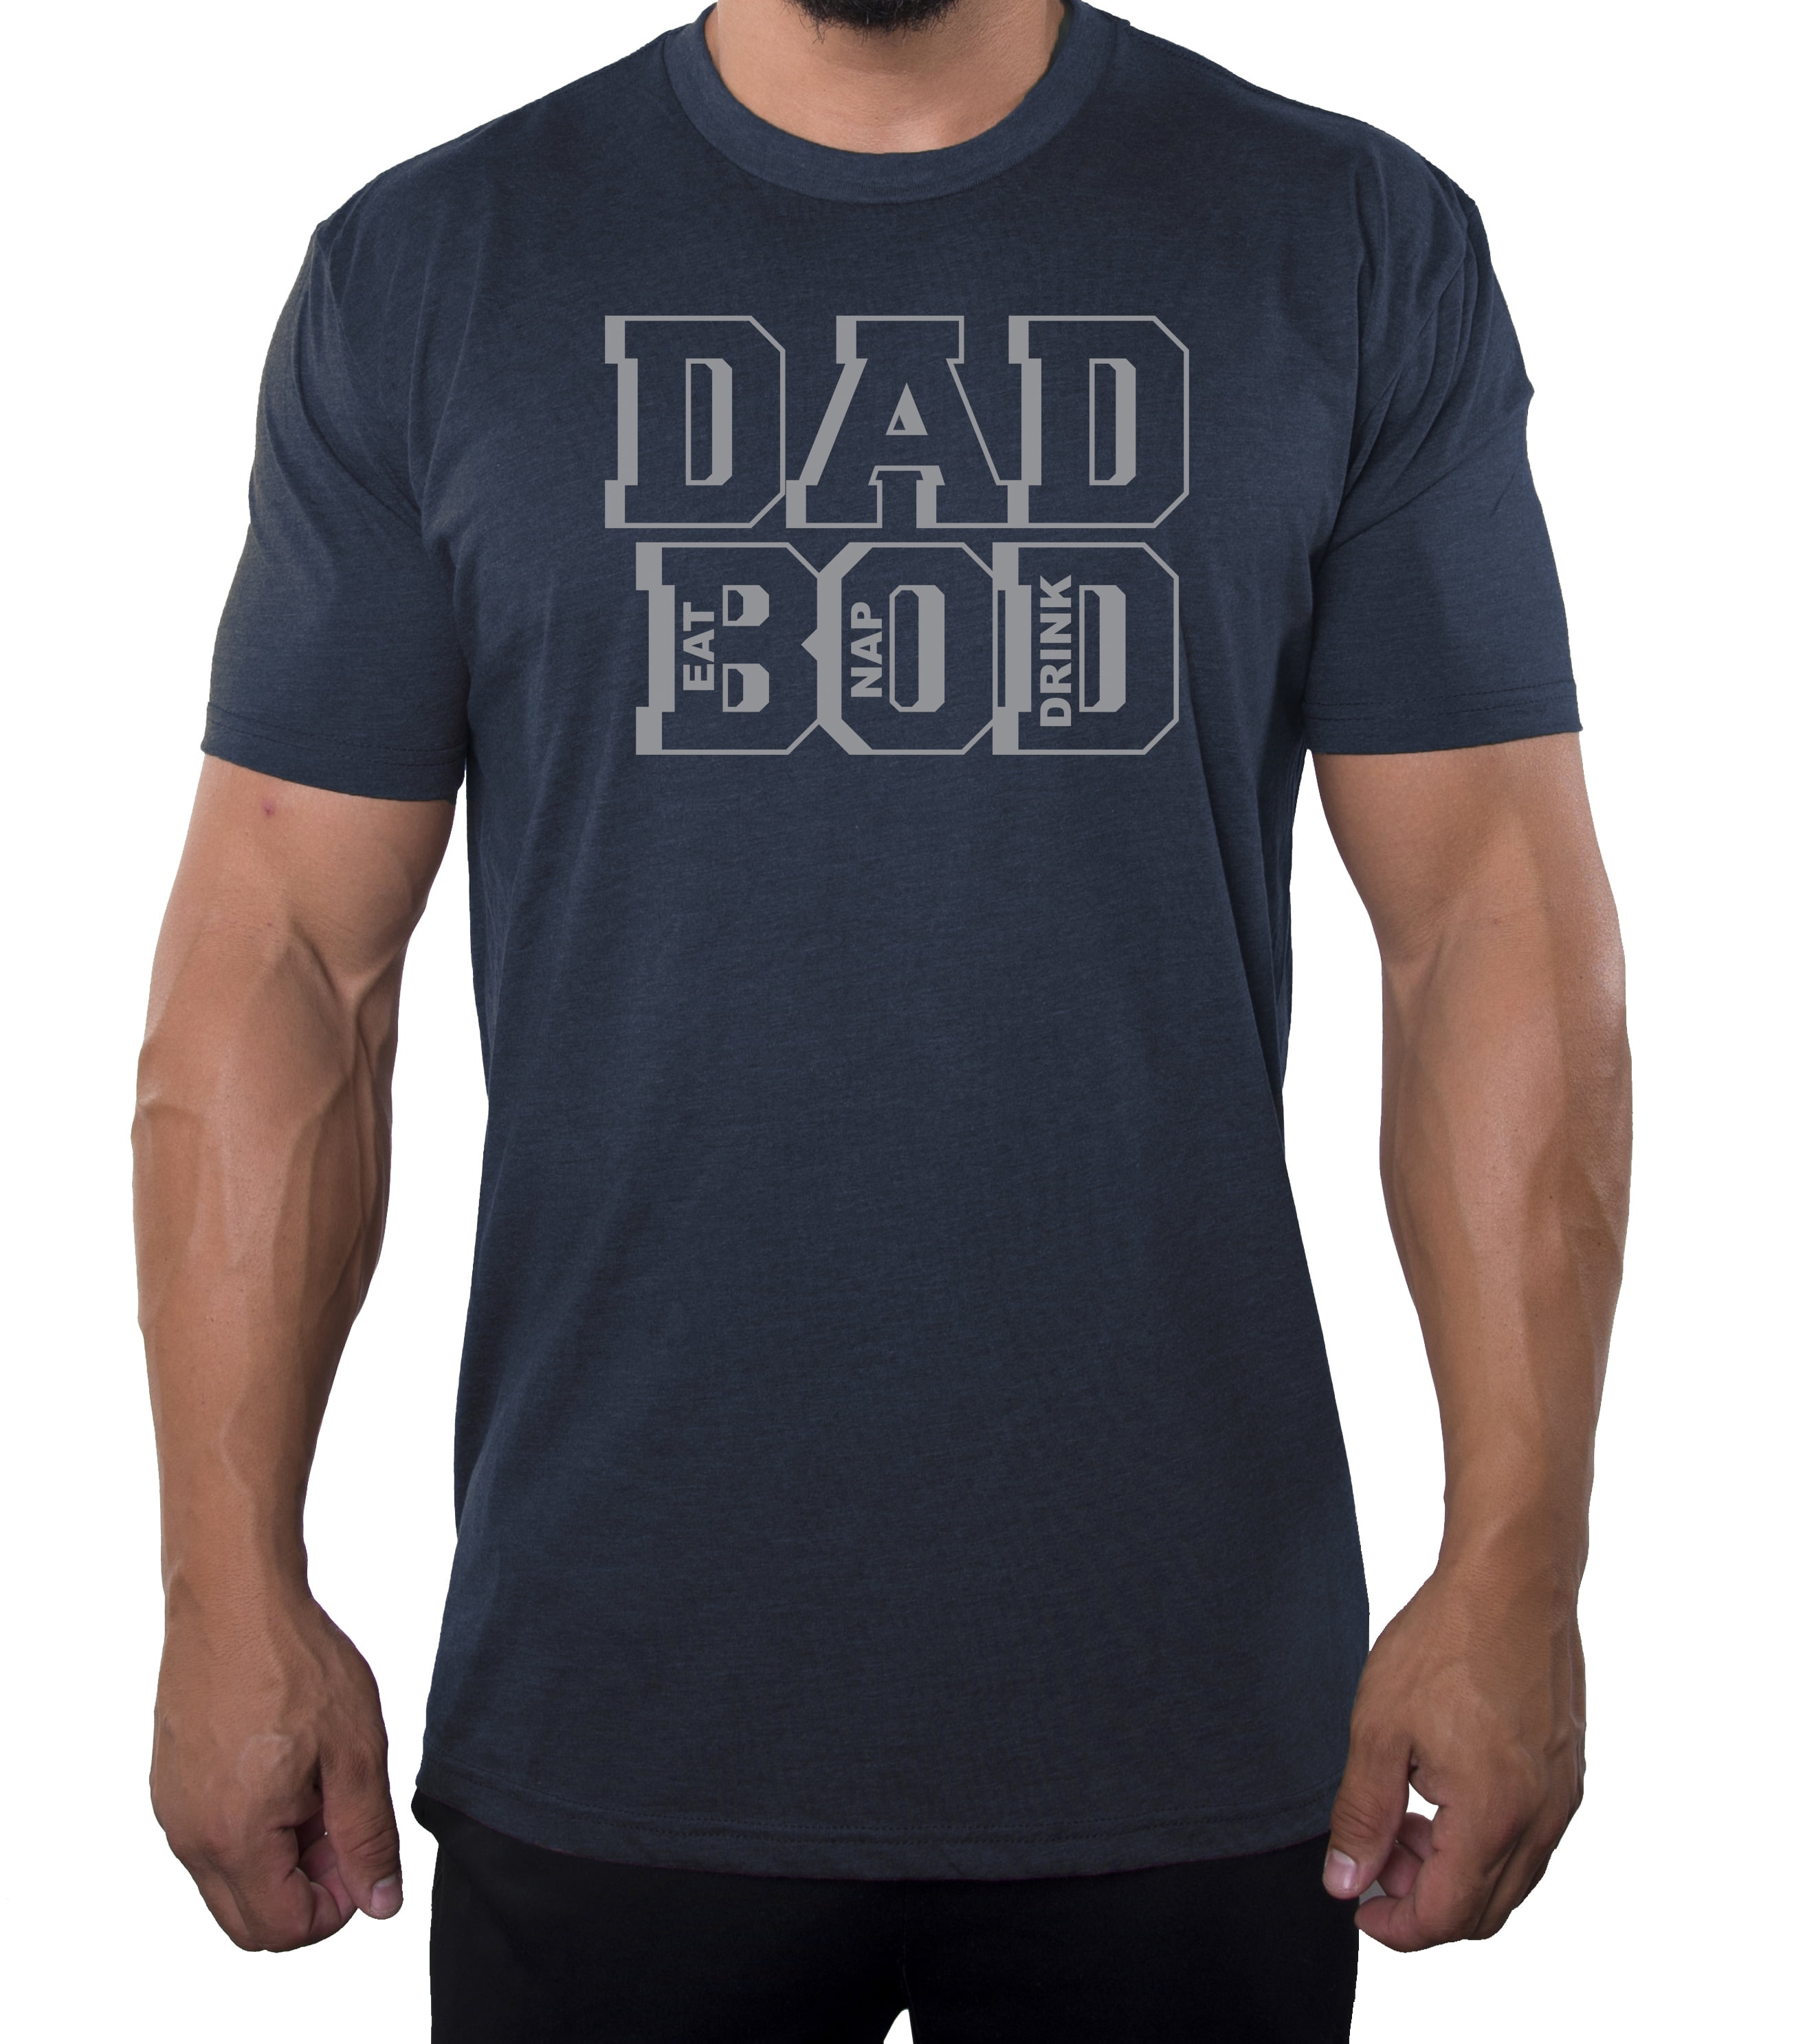 Dad Bod Shirts, Funny Dad Working on My dad Bod Graphic T-shirt - Black MH200DAD S28 4XL - Walmart.com